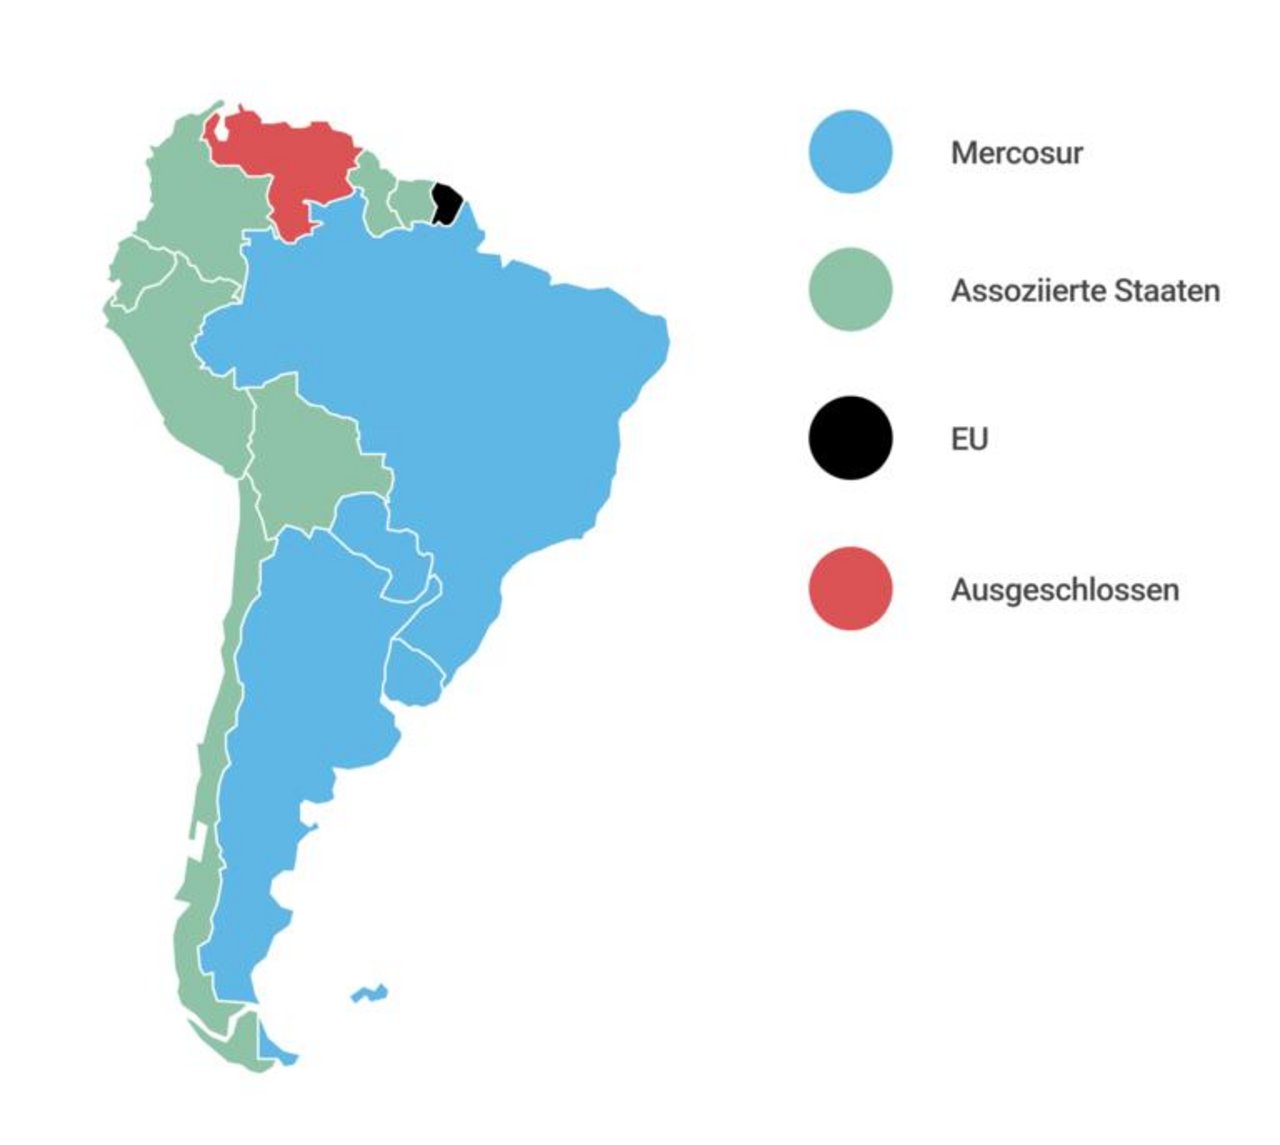 Vertreter aus sechs EU-Mitgliedstaaten kritisieren Mercosur-Deal. (Bild lid)